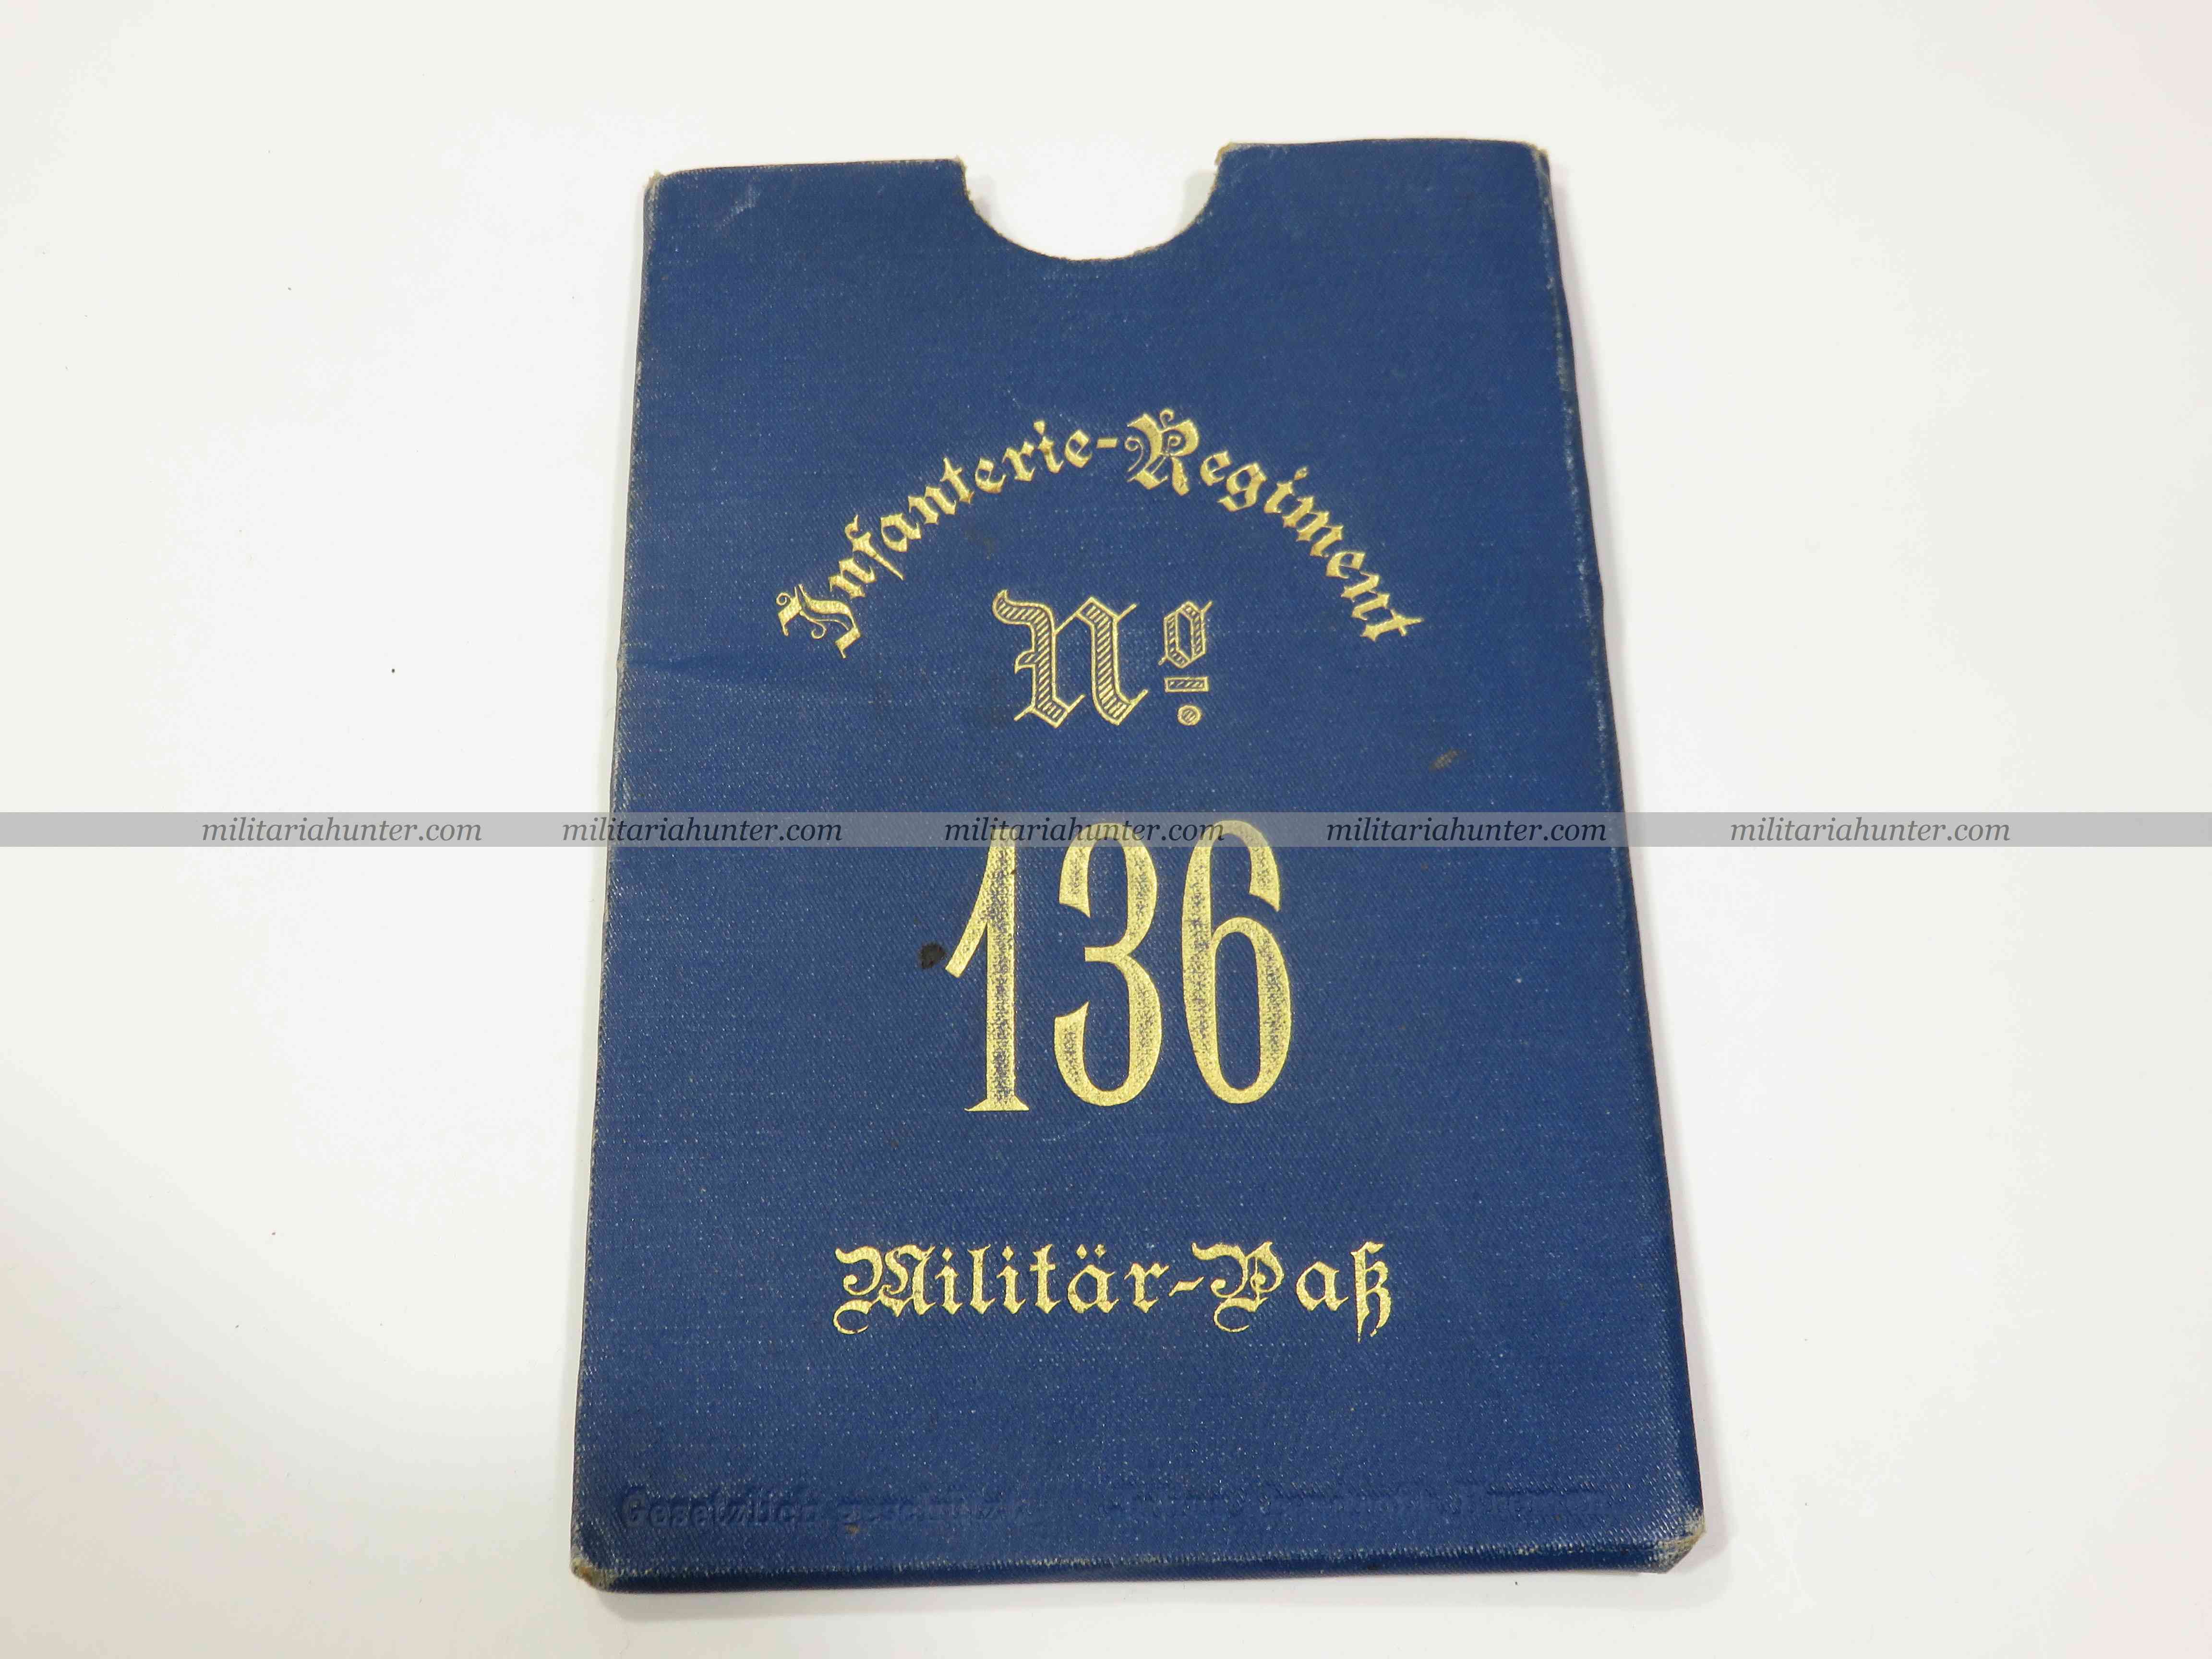 militaria : ww1 pochette Militarpass - Militarpaß Hülle JR 136